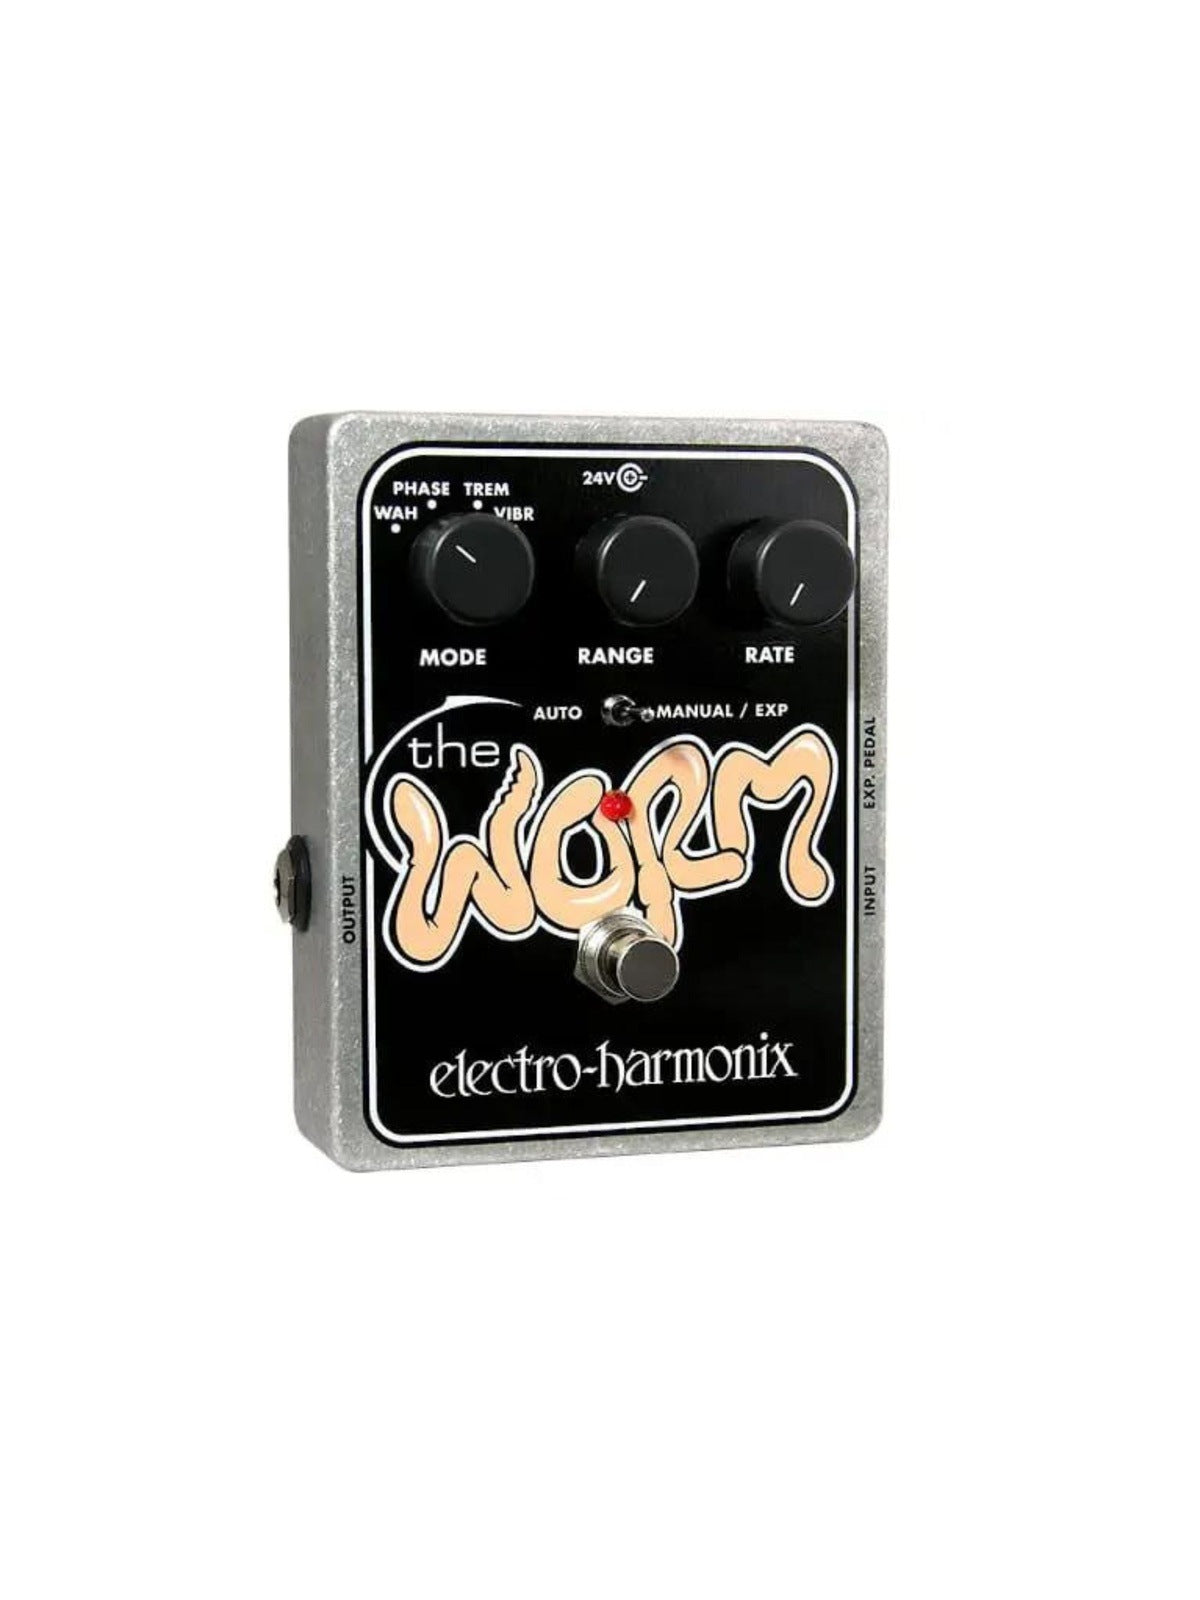 Electro Harmonix The Worm Wah / Phaser / Vibrato / Tremolo Pedal